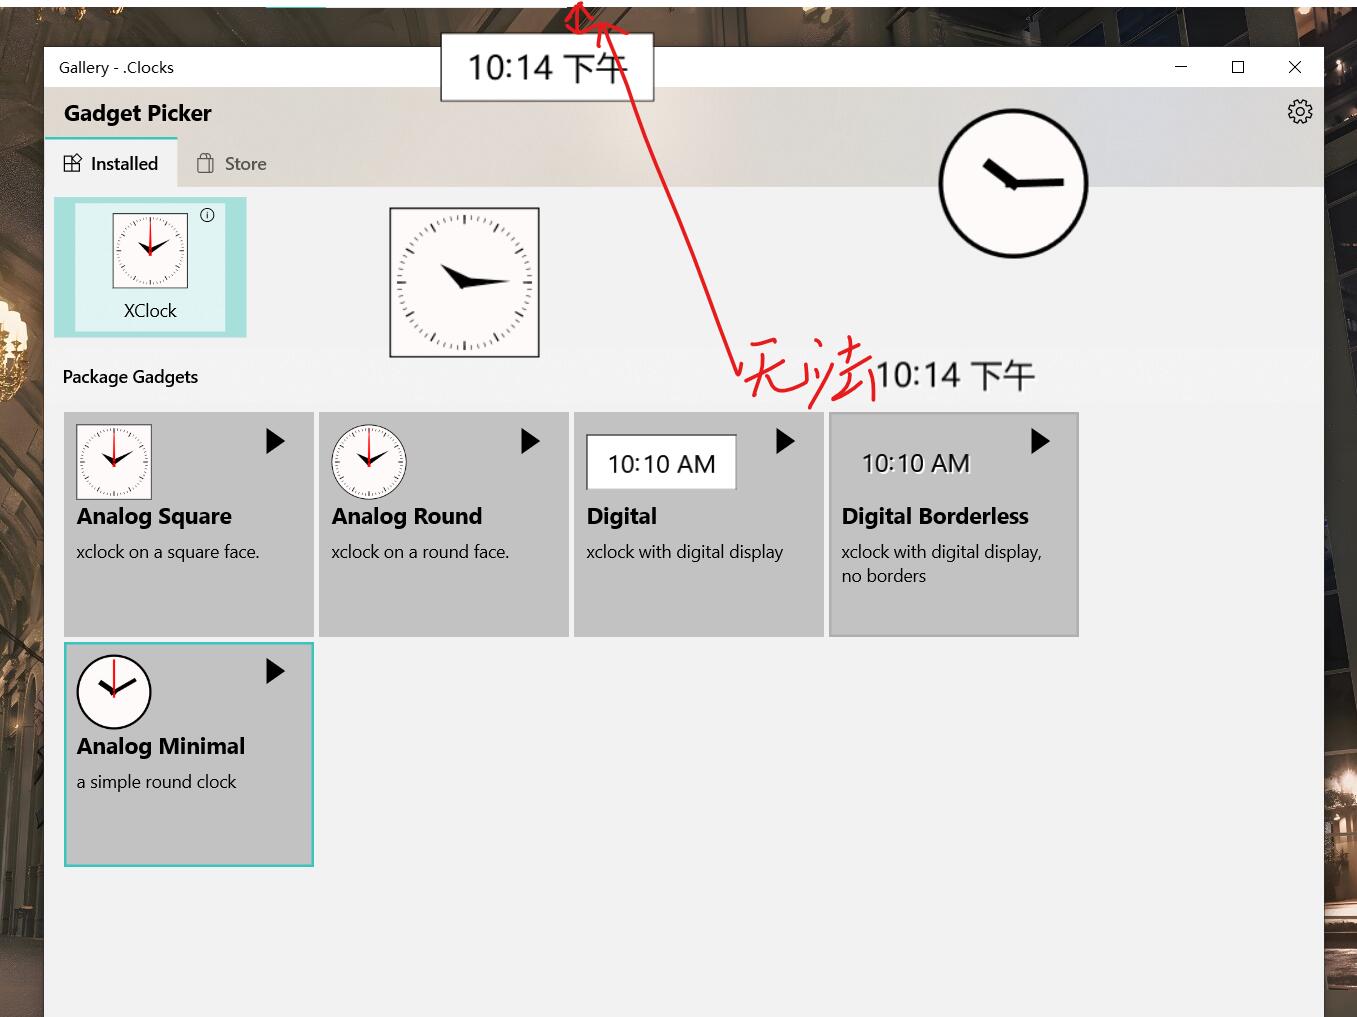 .Clocks - 美观简洁的桌面时钟[Windows] 2